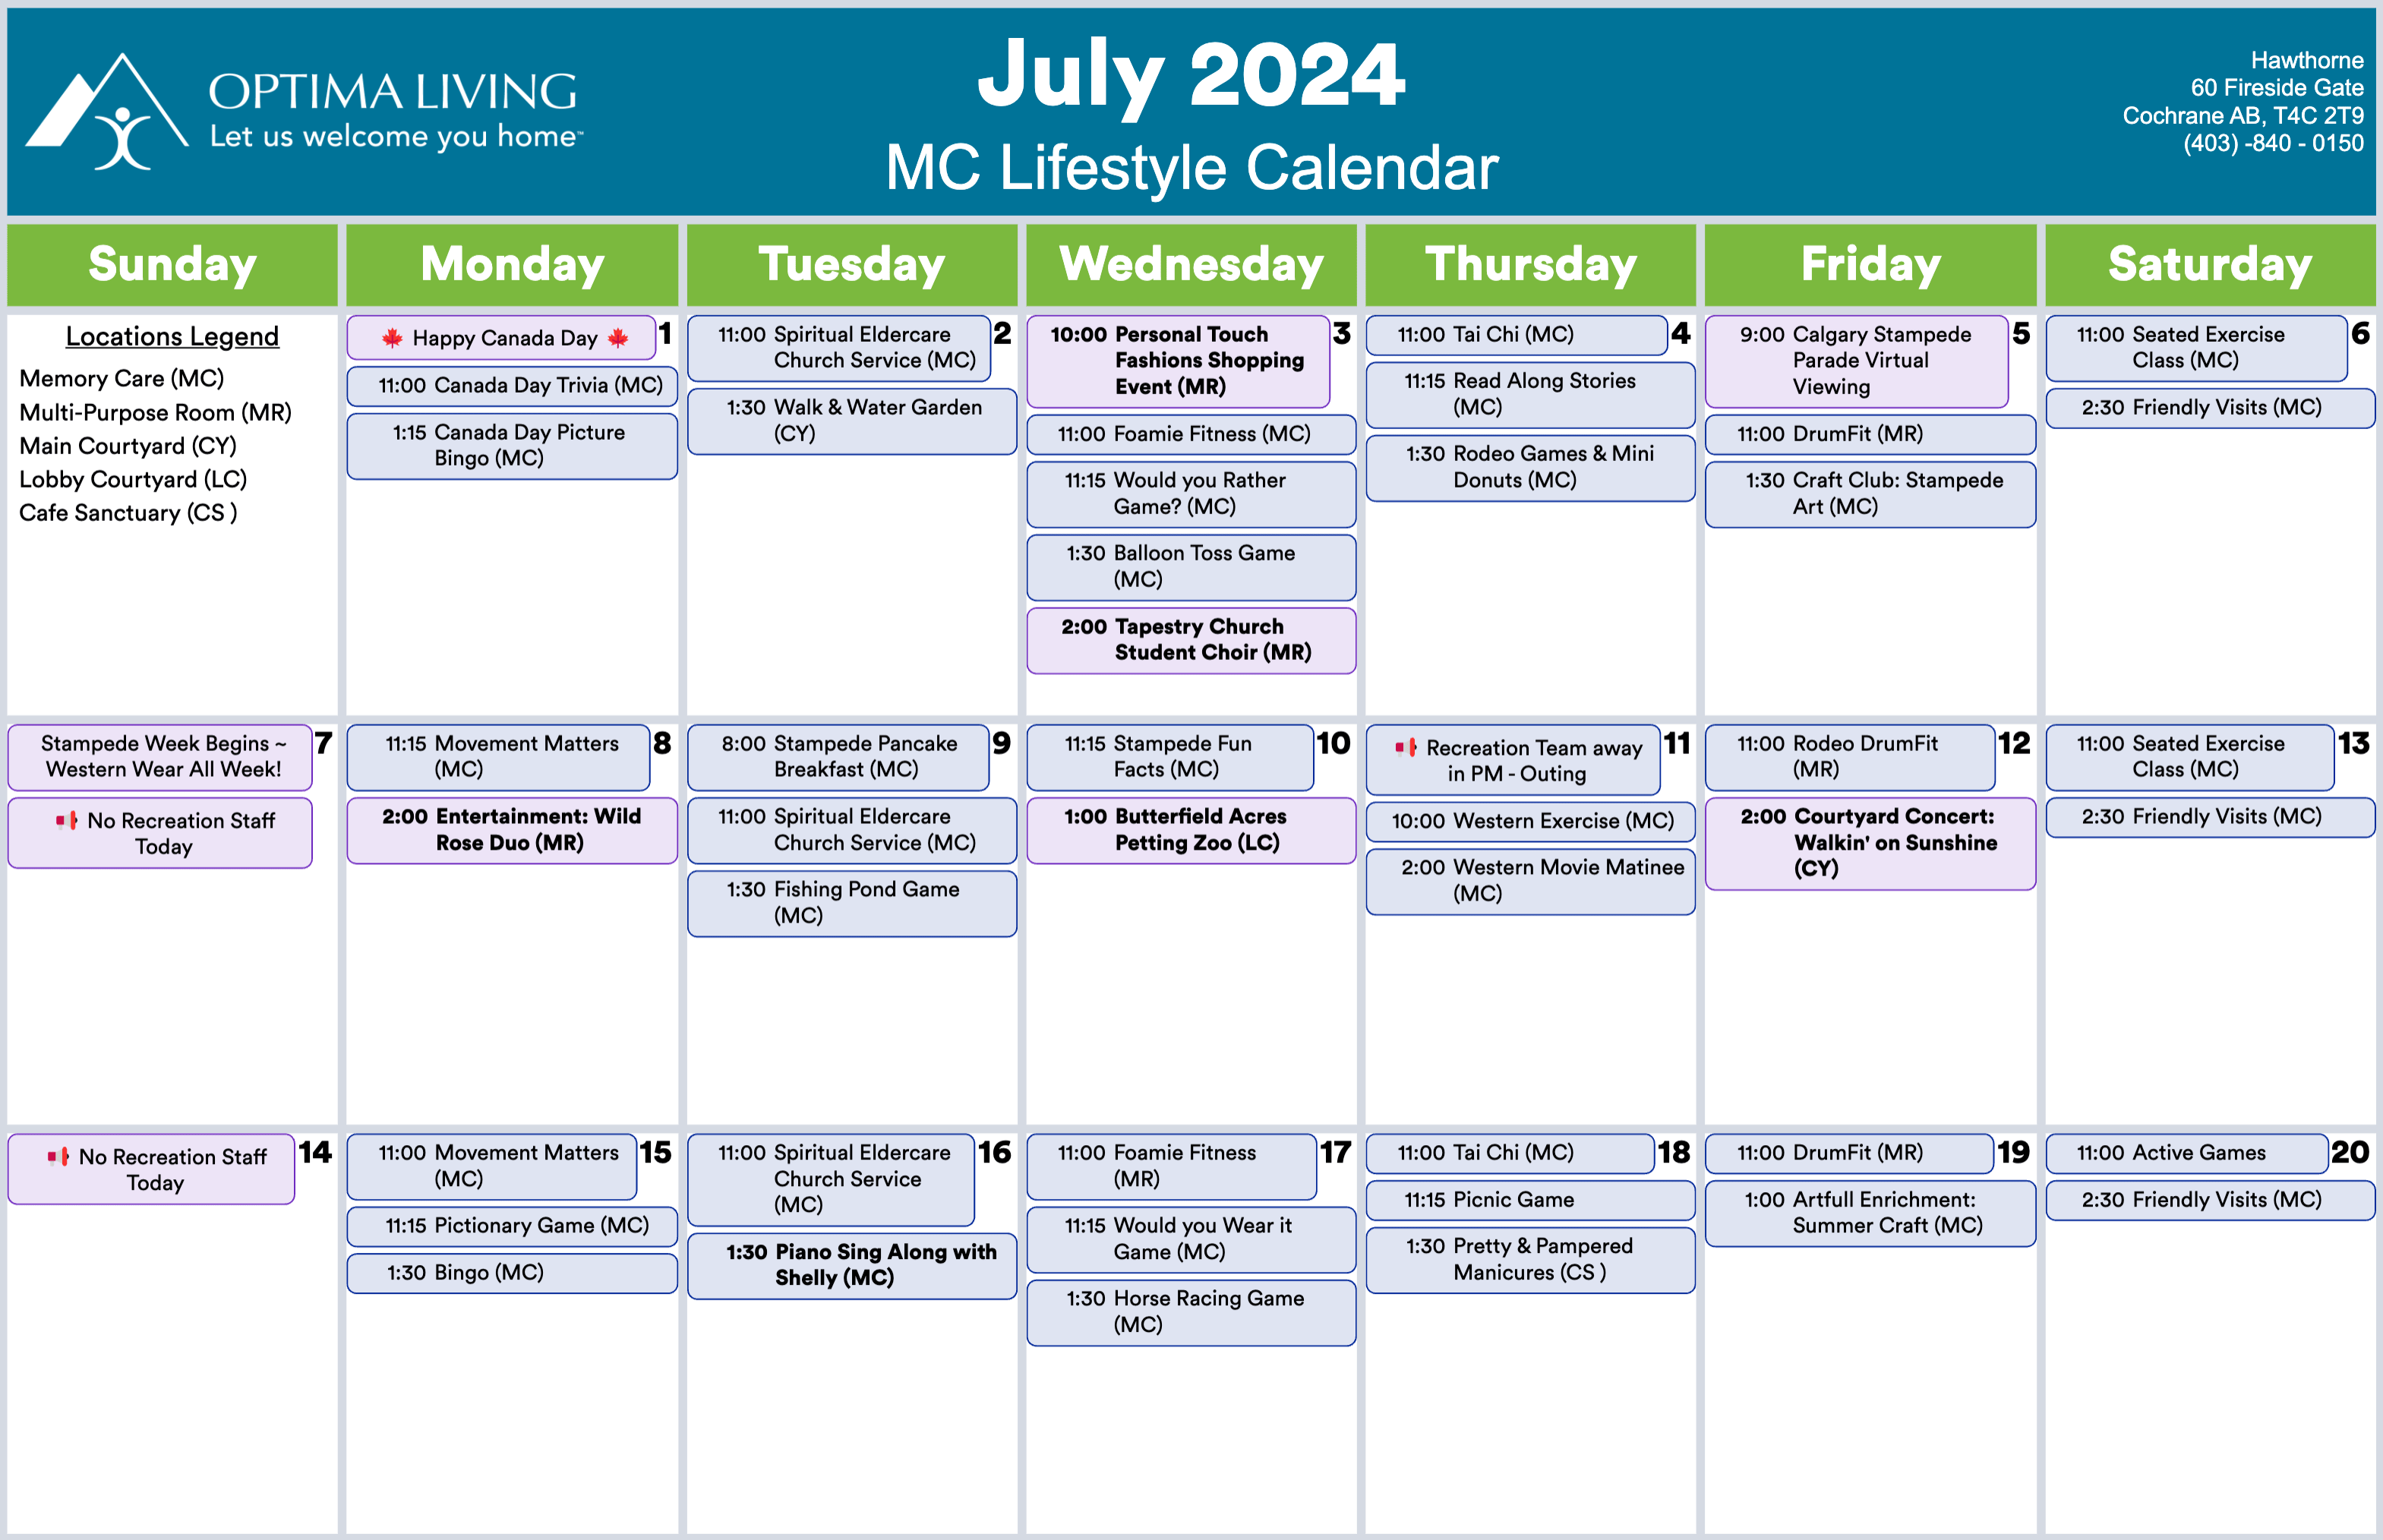 Hawthorne July 1 - 20 2024 Memory Care event calendar